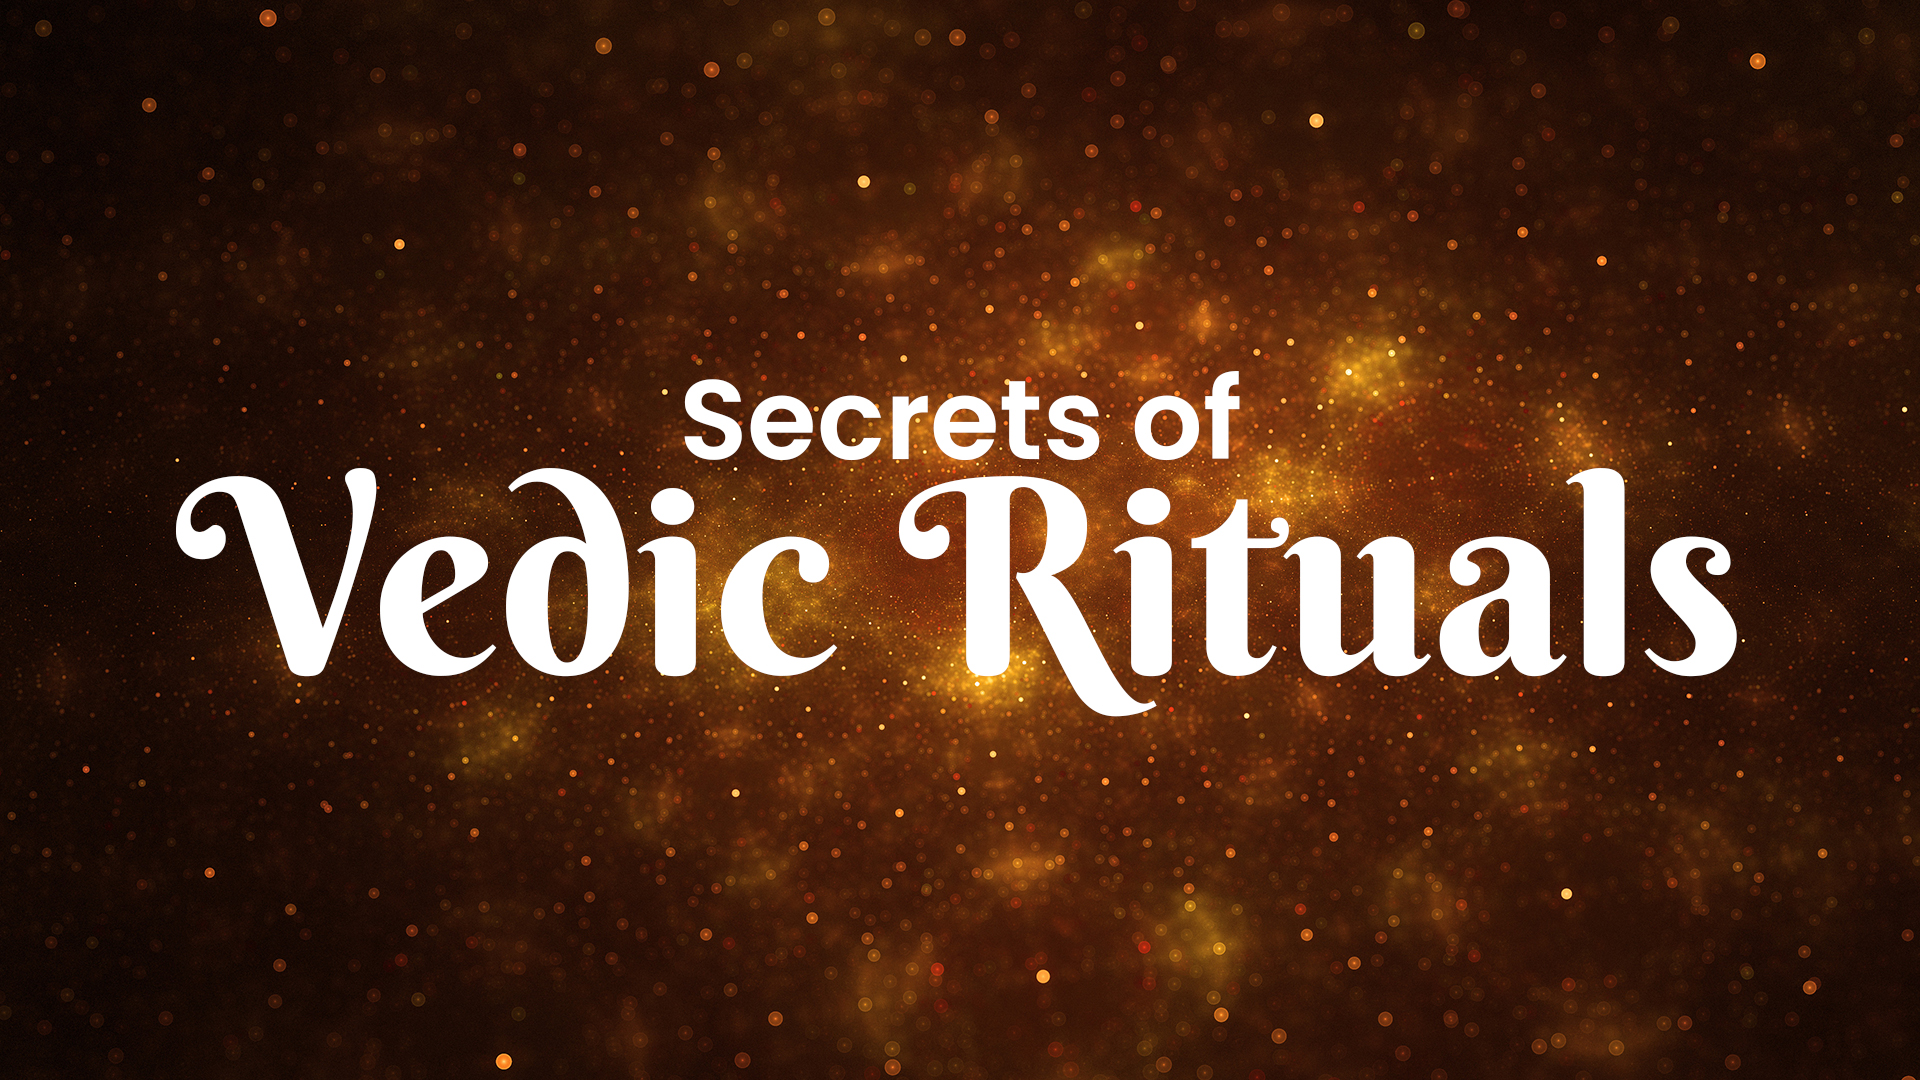 Secrets of Vedic Rituals